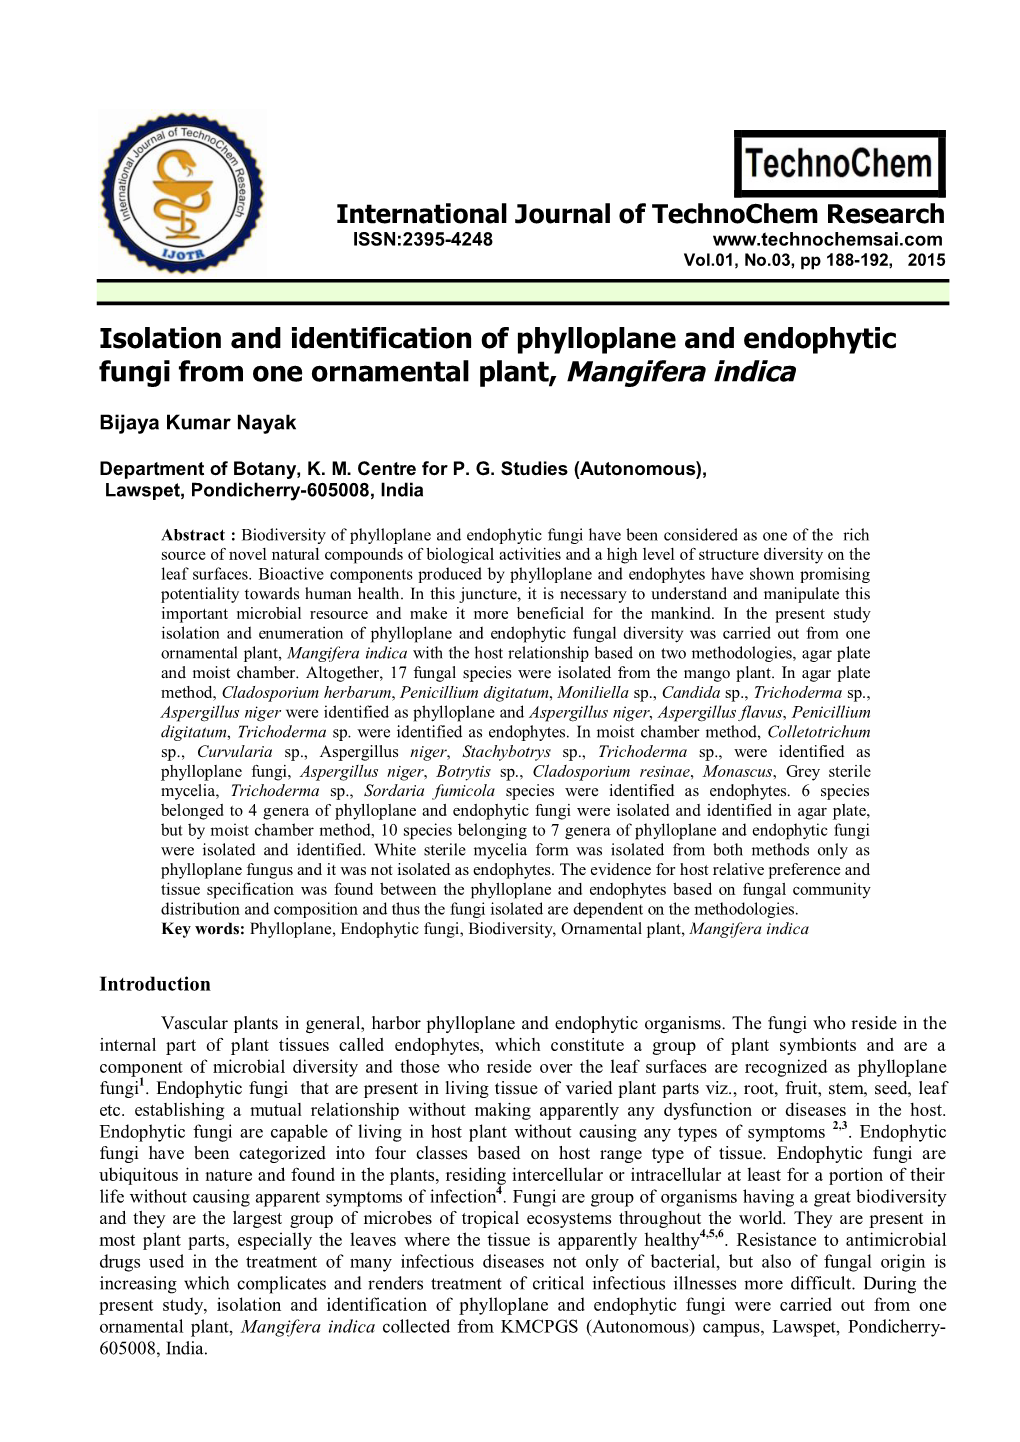 Isolation and Identification of Phylloplane and Endophytic Fungi from One Ornamental Plant, Mangifera Indica